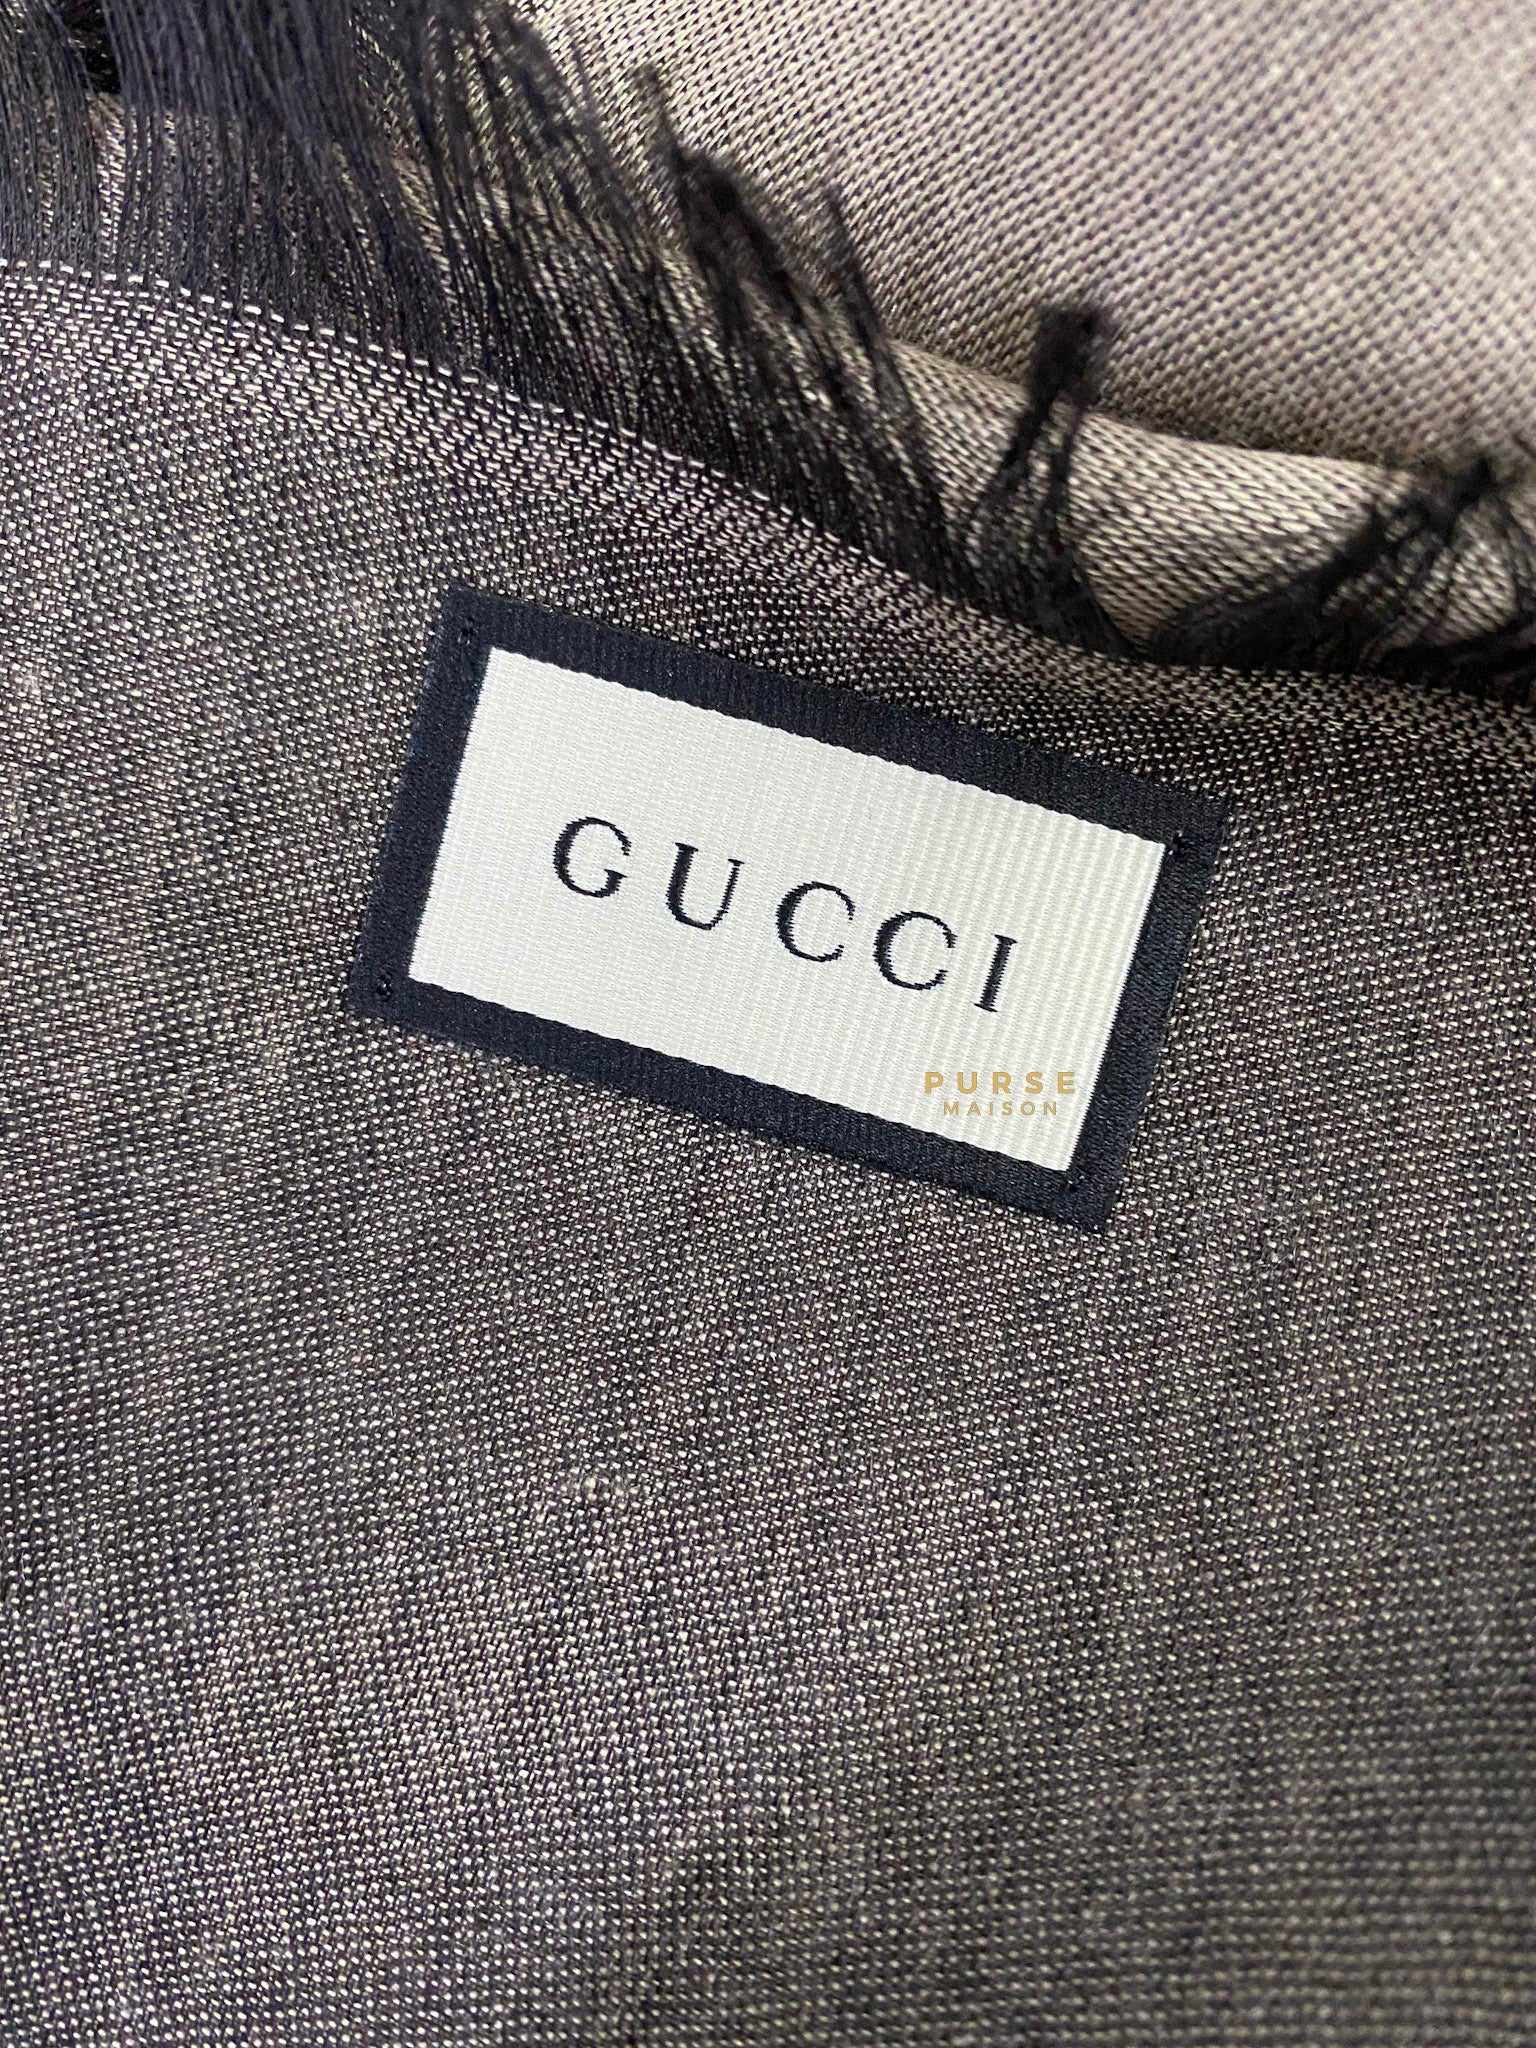 Gucci Scarf GG Light Grey (135 x 135 cm) (135 x 135 cm)